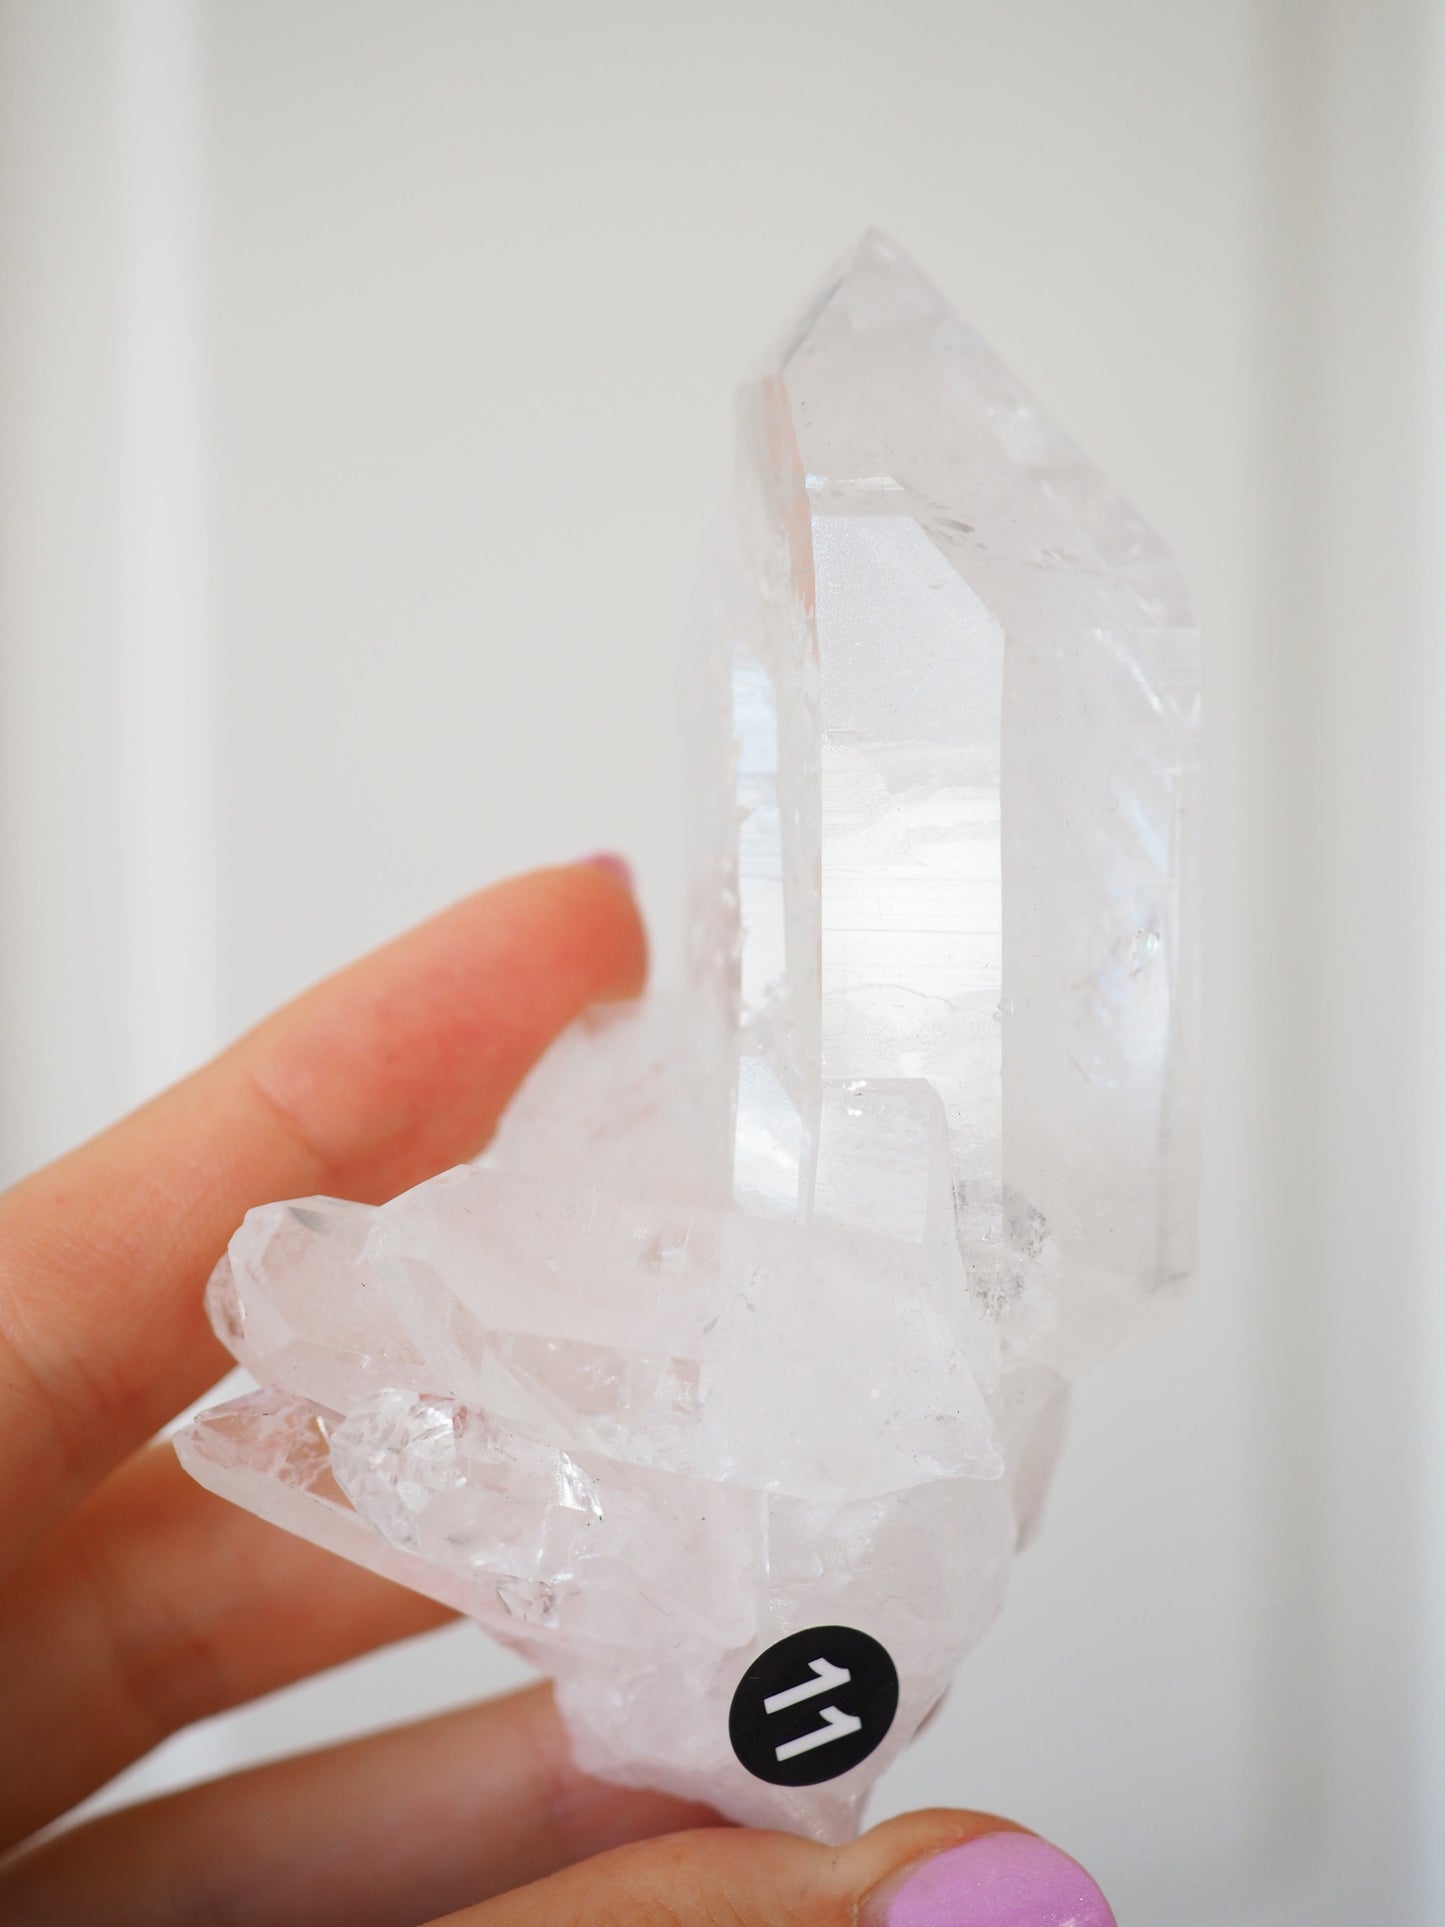 Bergkristall Cluster ca 10cm [11] - aus Minas Gerais Brasilien HIGH QUALITY